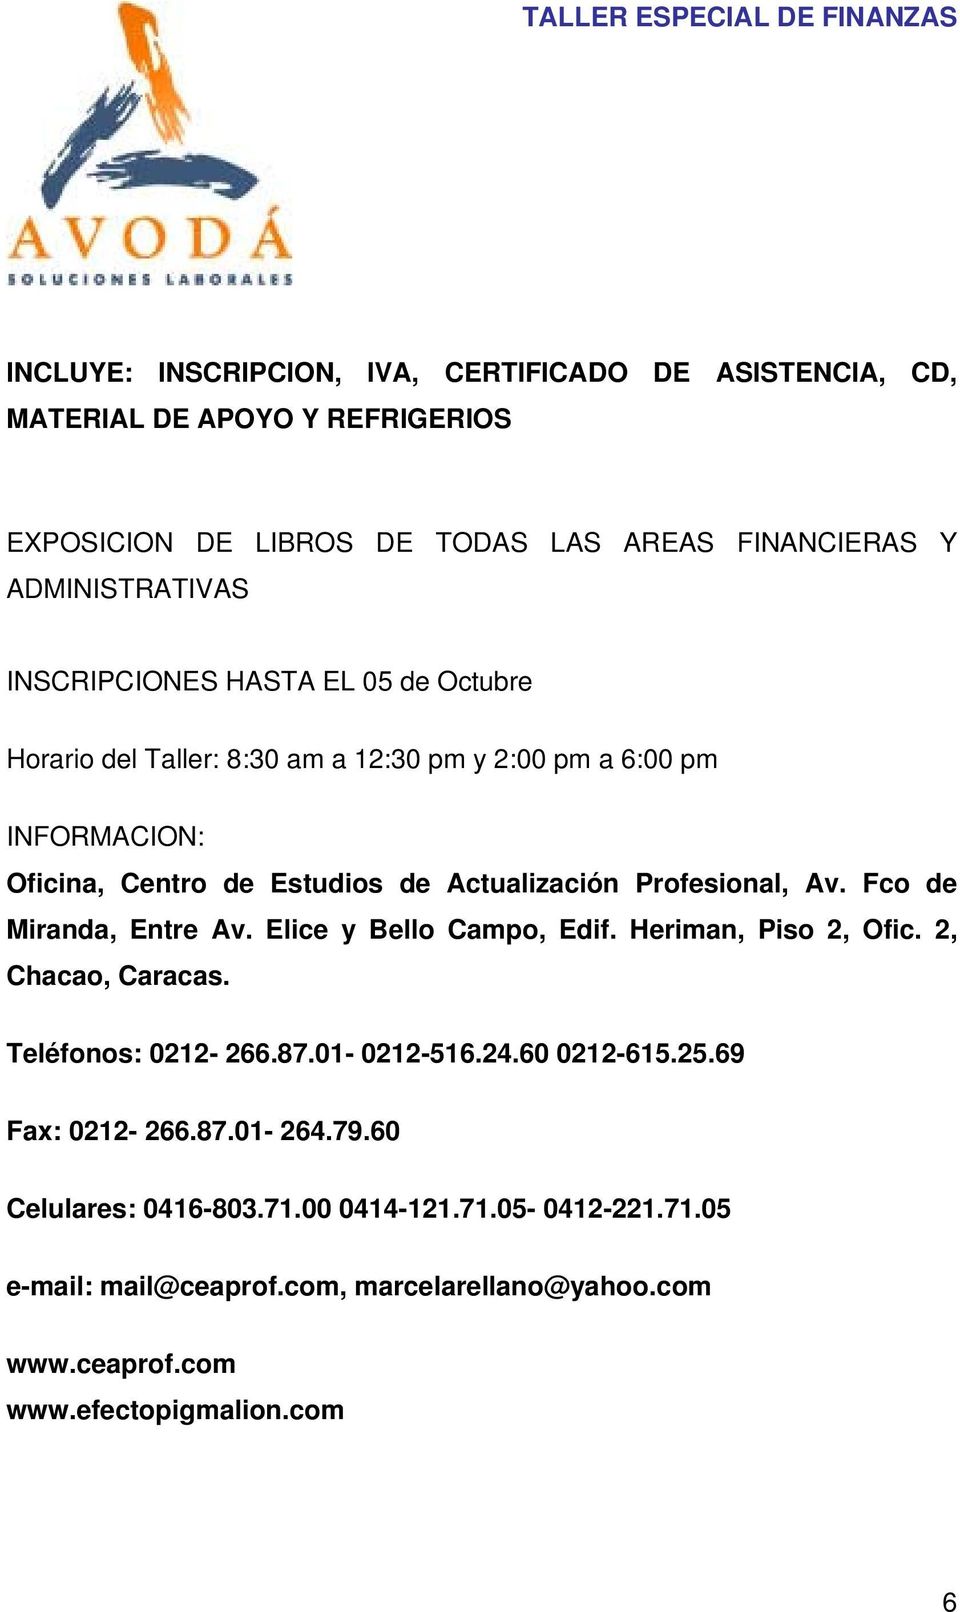 Profesional, Av. Fco de Miranda, Entre Av. Elice y Bello Campo, Edif. Heriman, Piso 2, Ofic. 2, Chacao, Caracas. Teléfonos: 0212-266.87.01-0212-516.24.60 0212-615.25.